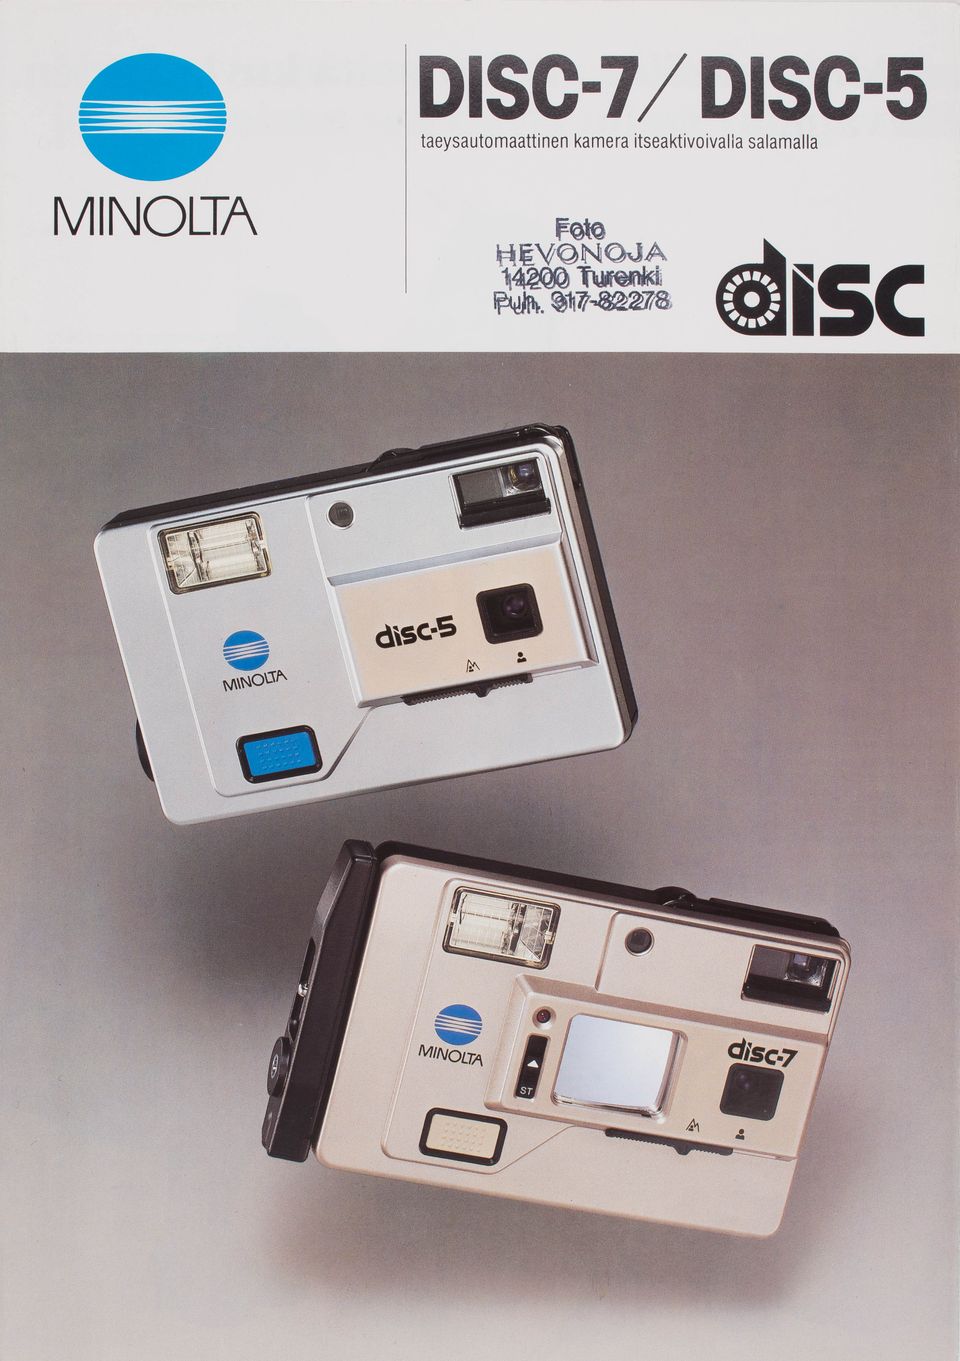 Minolta DISK-7 / DISC-5